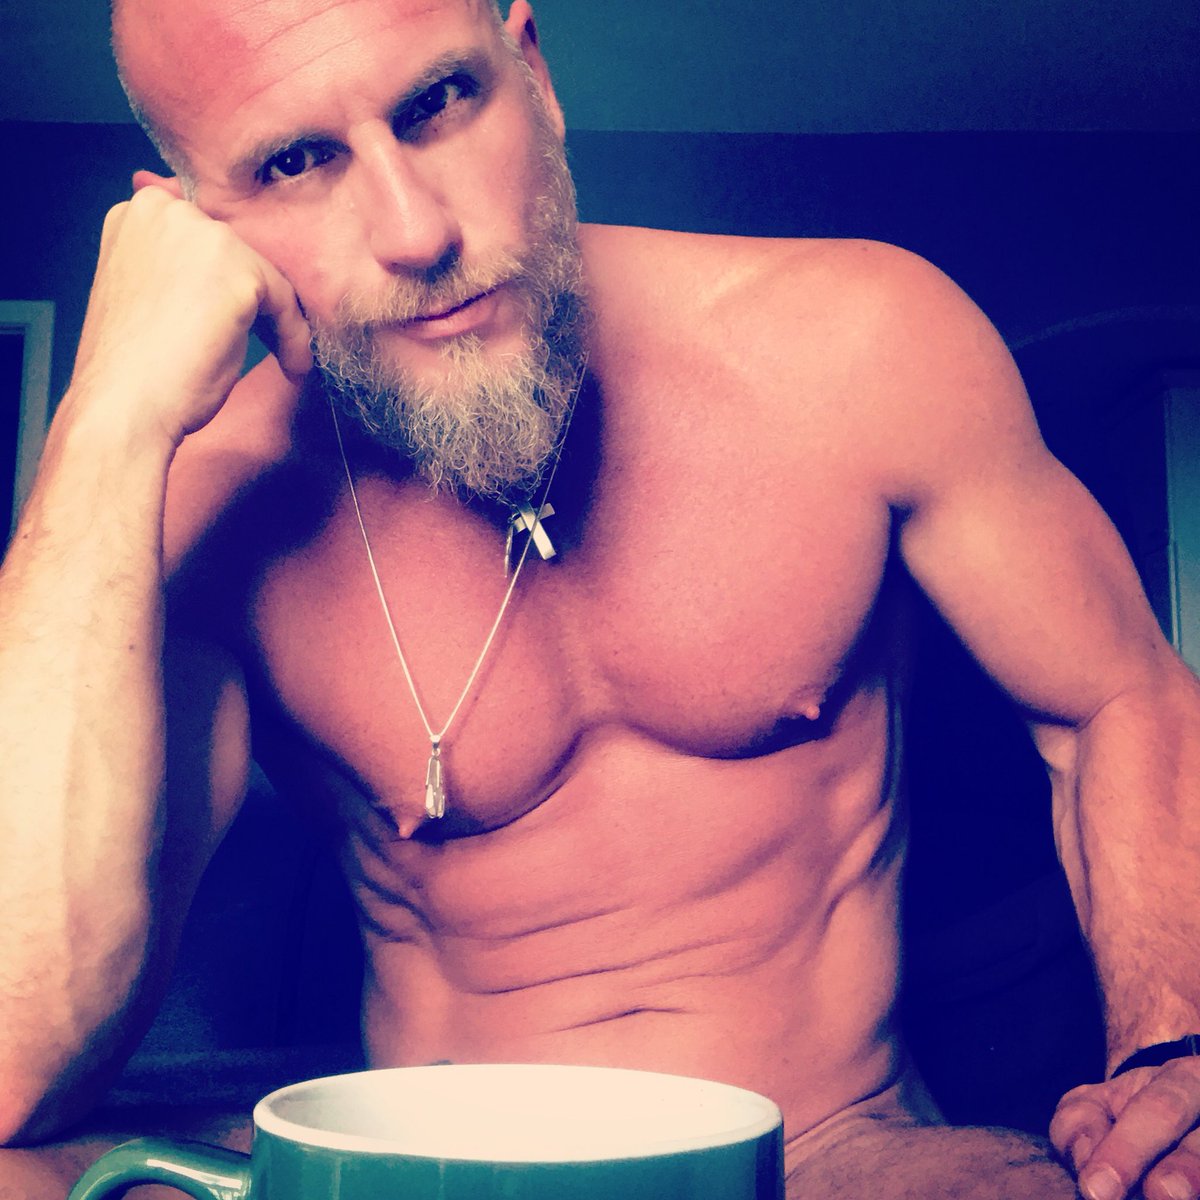 Café?
#buenastardes #felizjueves #viking #vikingo #beard #gaybeard #gingerbeard #hsh #test_oh_sterone #ohboypl #beardsaresexy #homotography #homographias #coffee #model #modelo